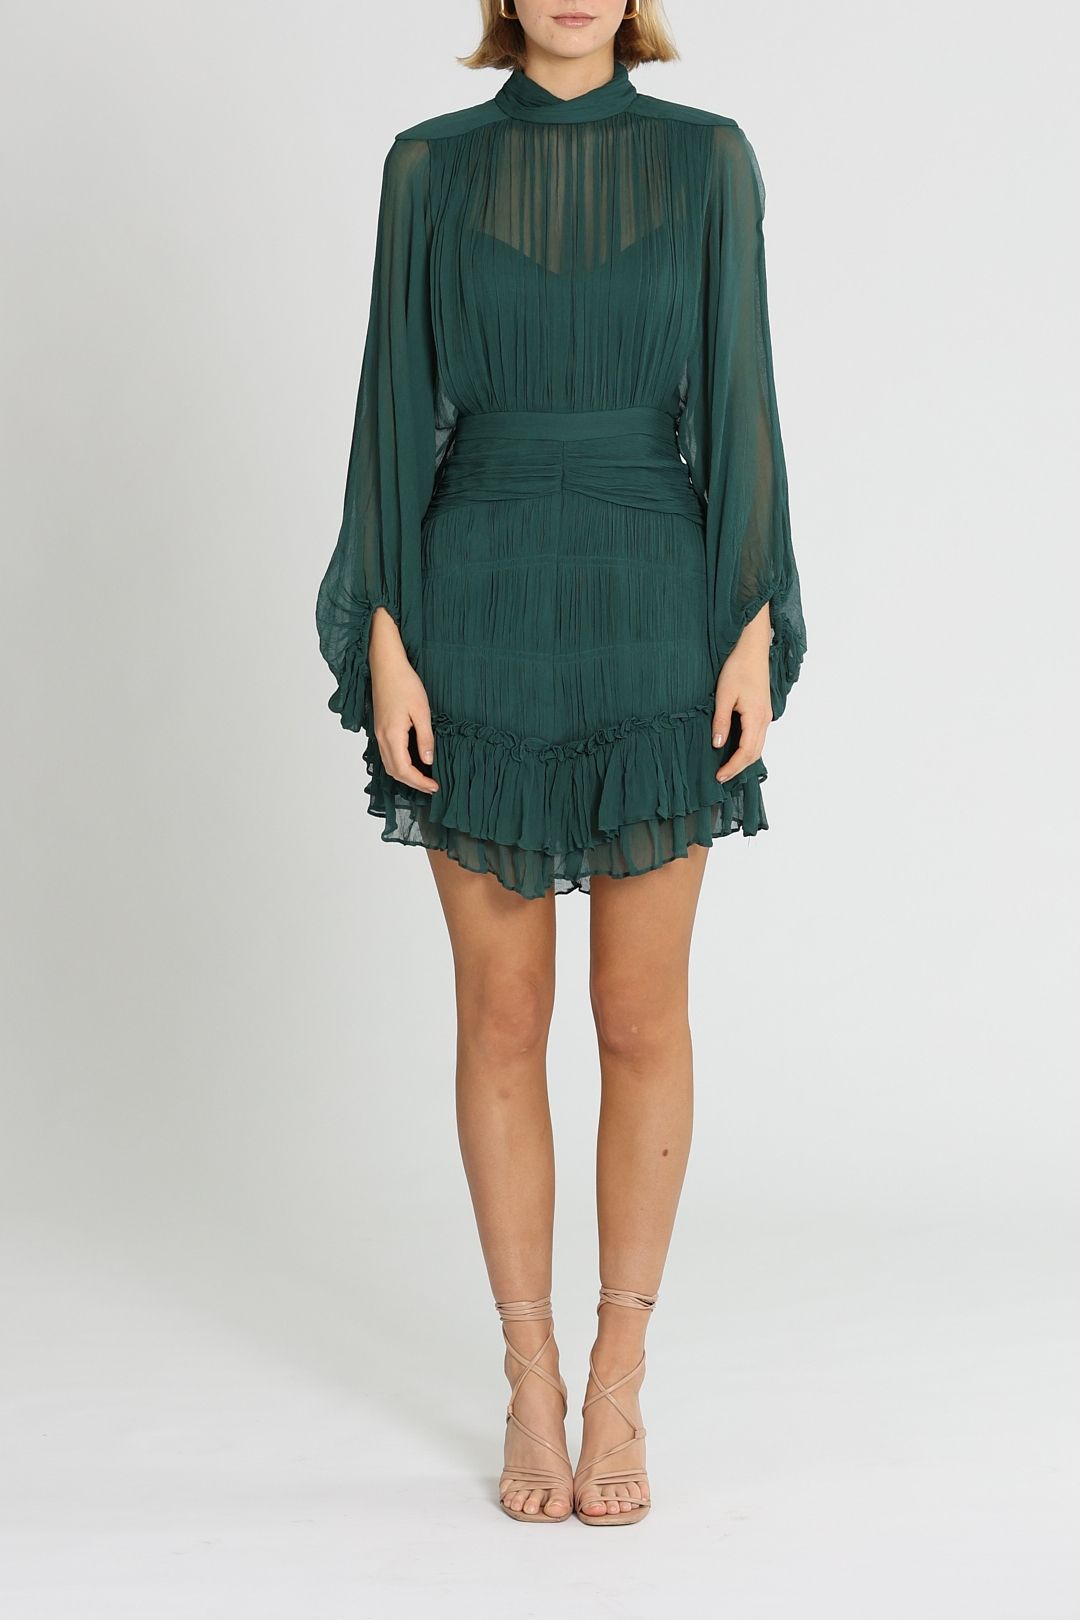 Shona Joy Leonie Long Sleeve Mini Dress Green